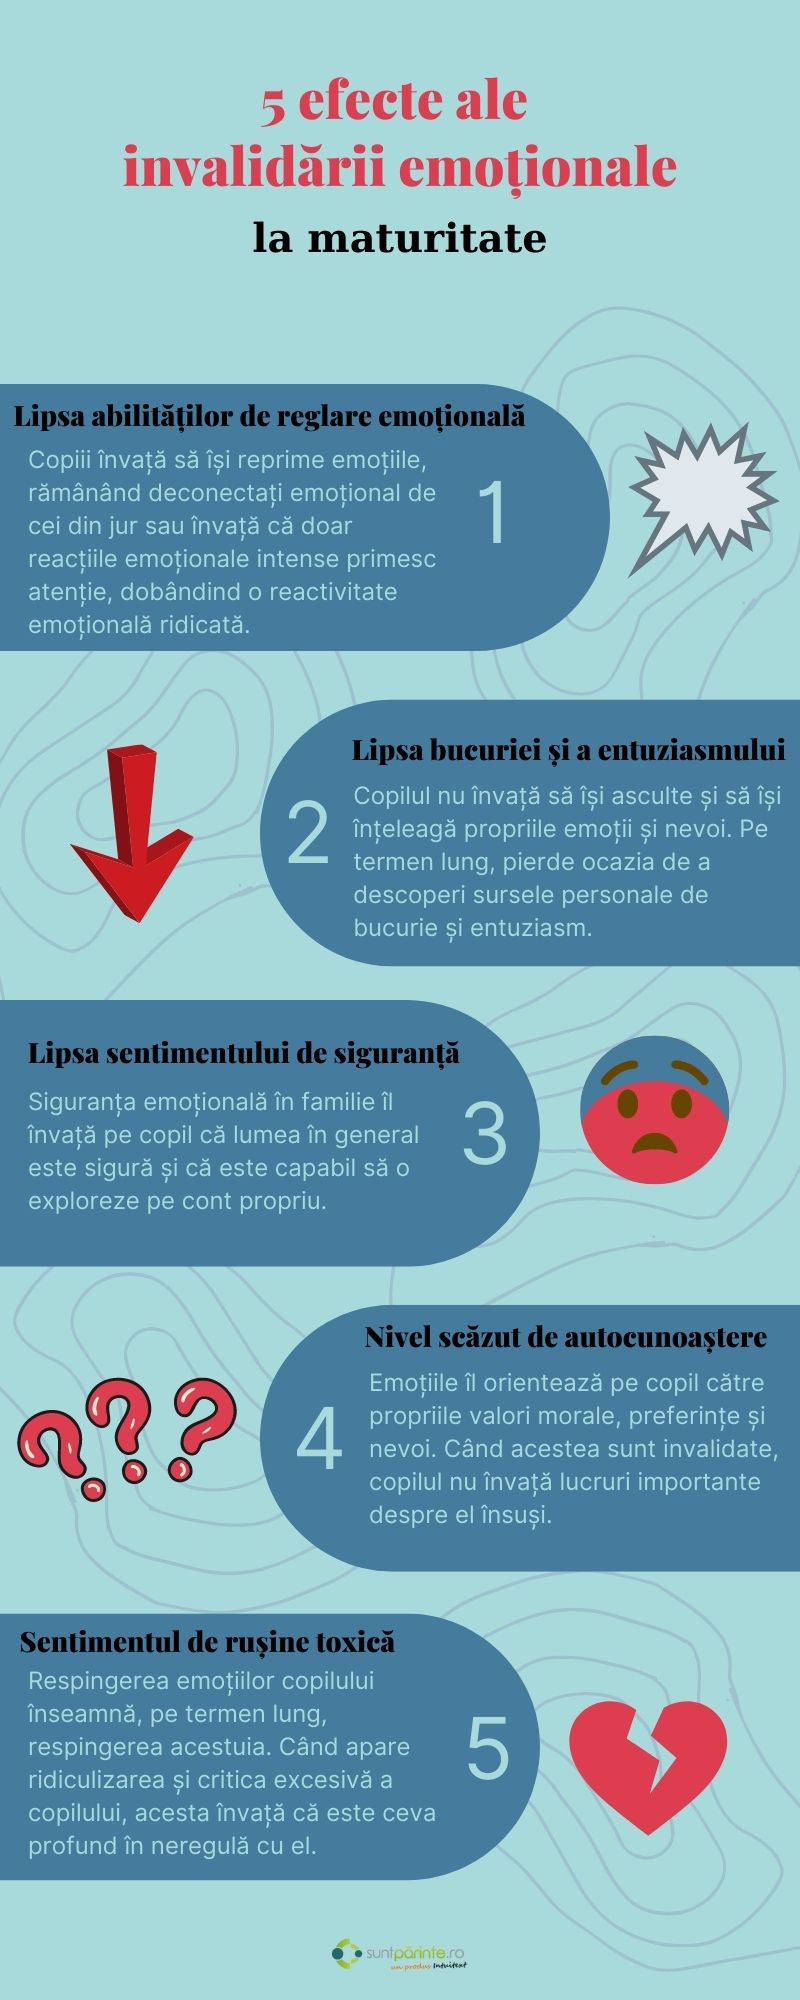 5 efecte ale invalidarii emotionale